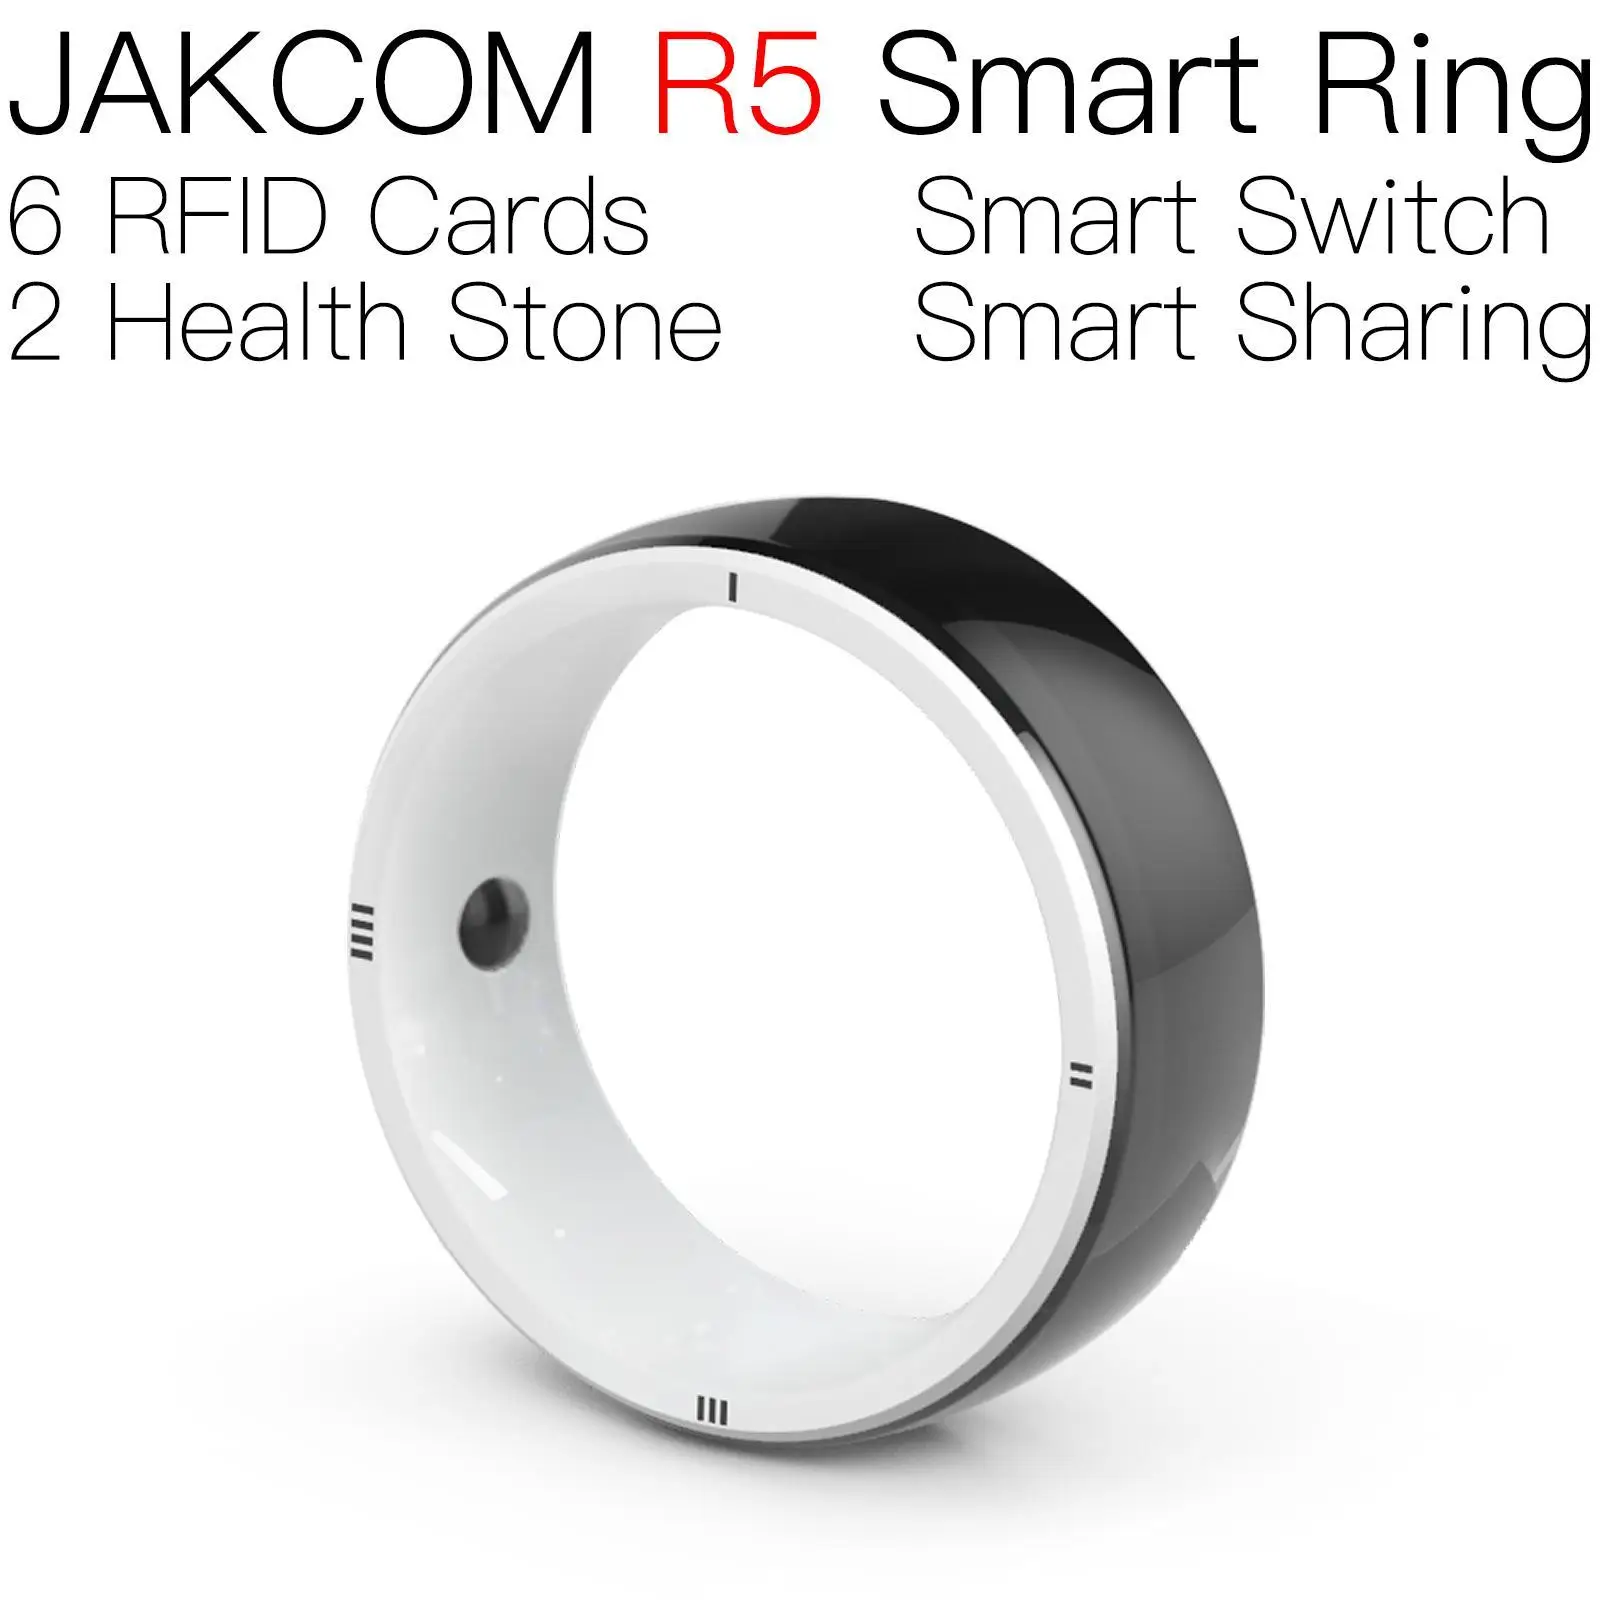 

JAKCOM R5 Smart Ring Super value than aquaculture better nail bolt euv diecast tag copier uhf reader micro rfid cuid smart m